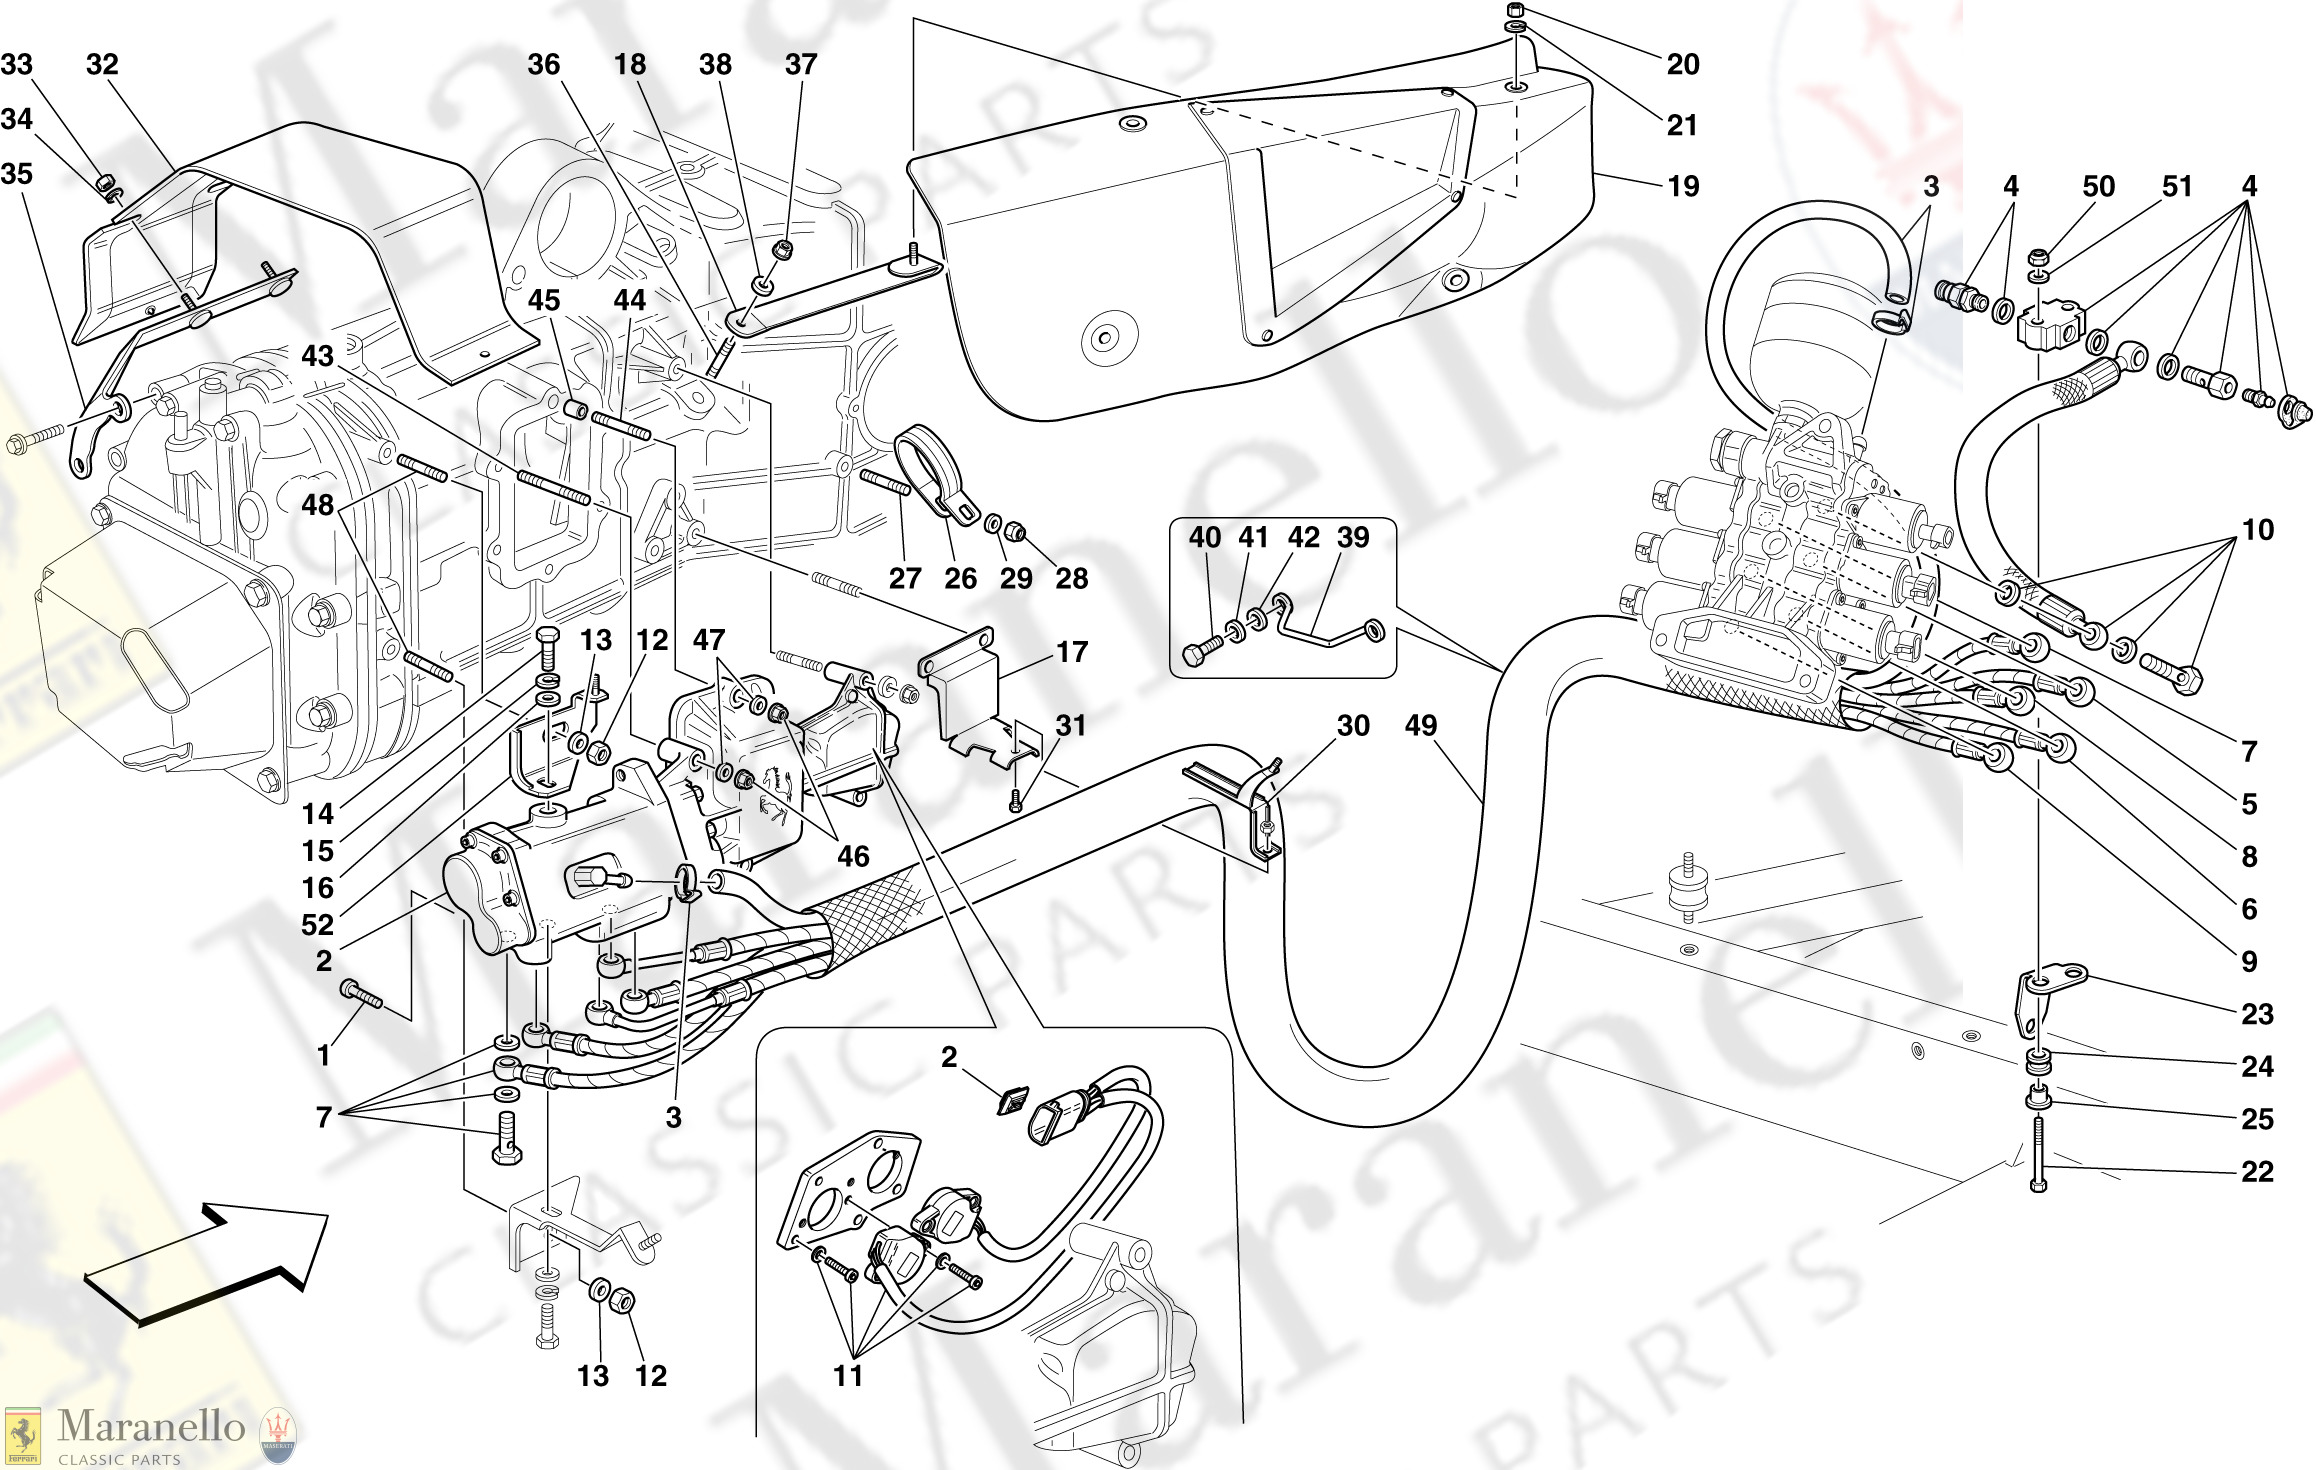 029 - Hydraulic F1 Gearbox And Clutch Control